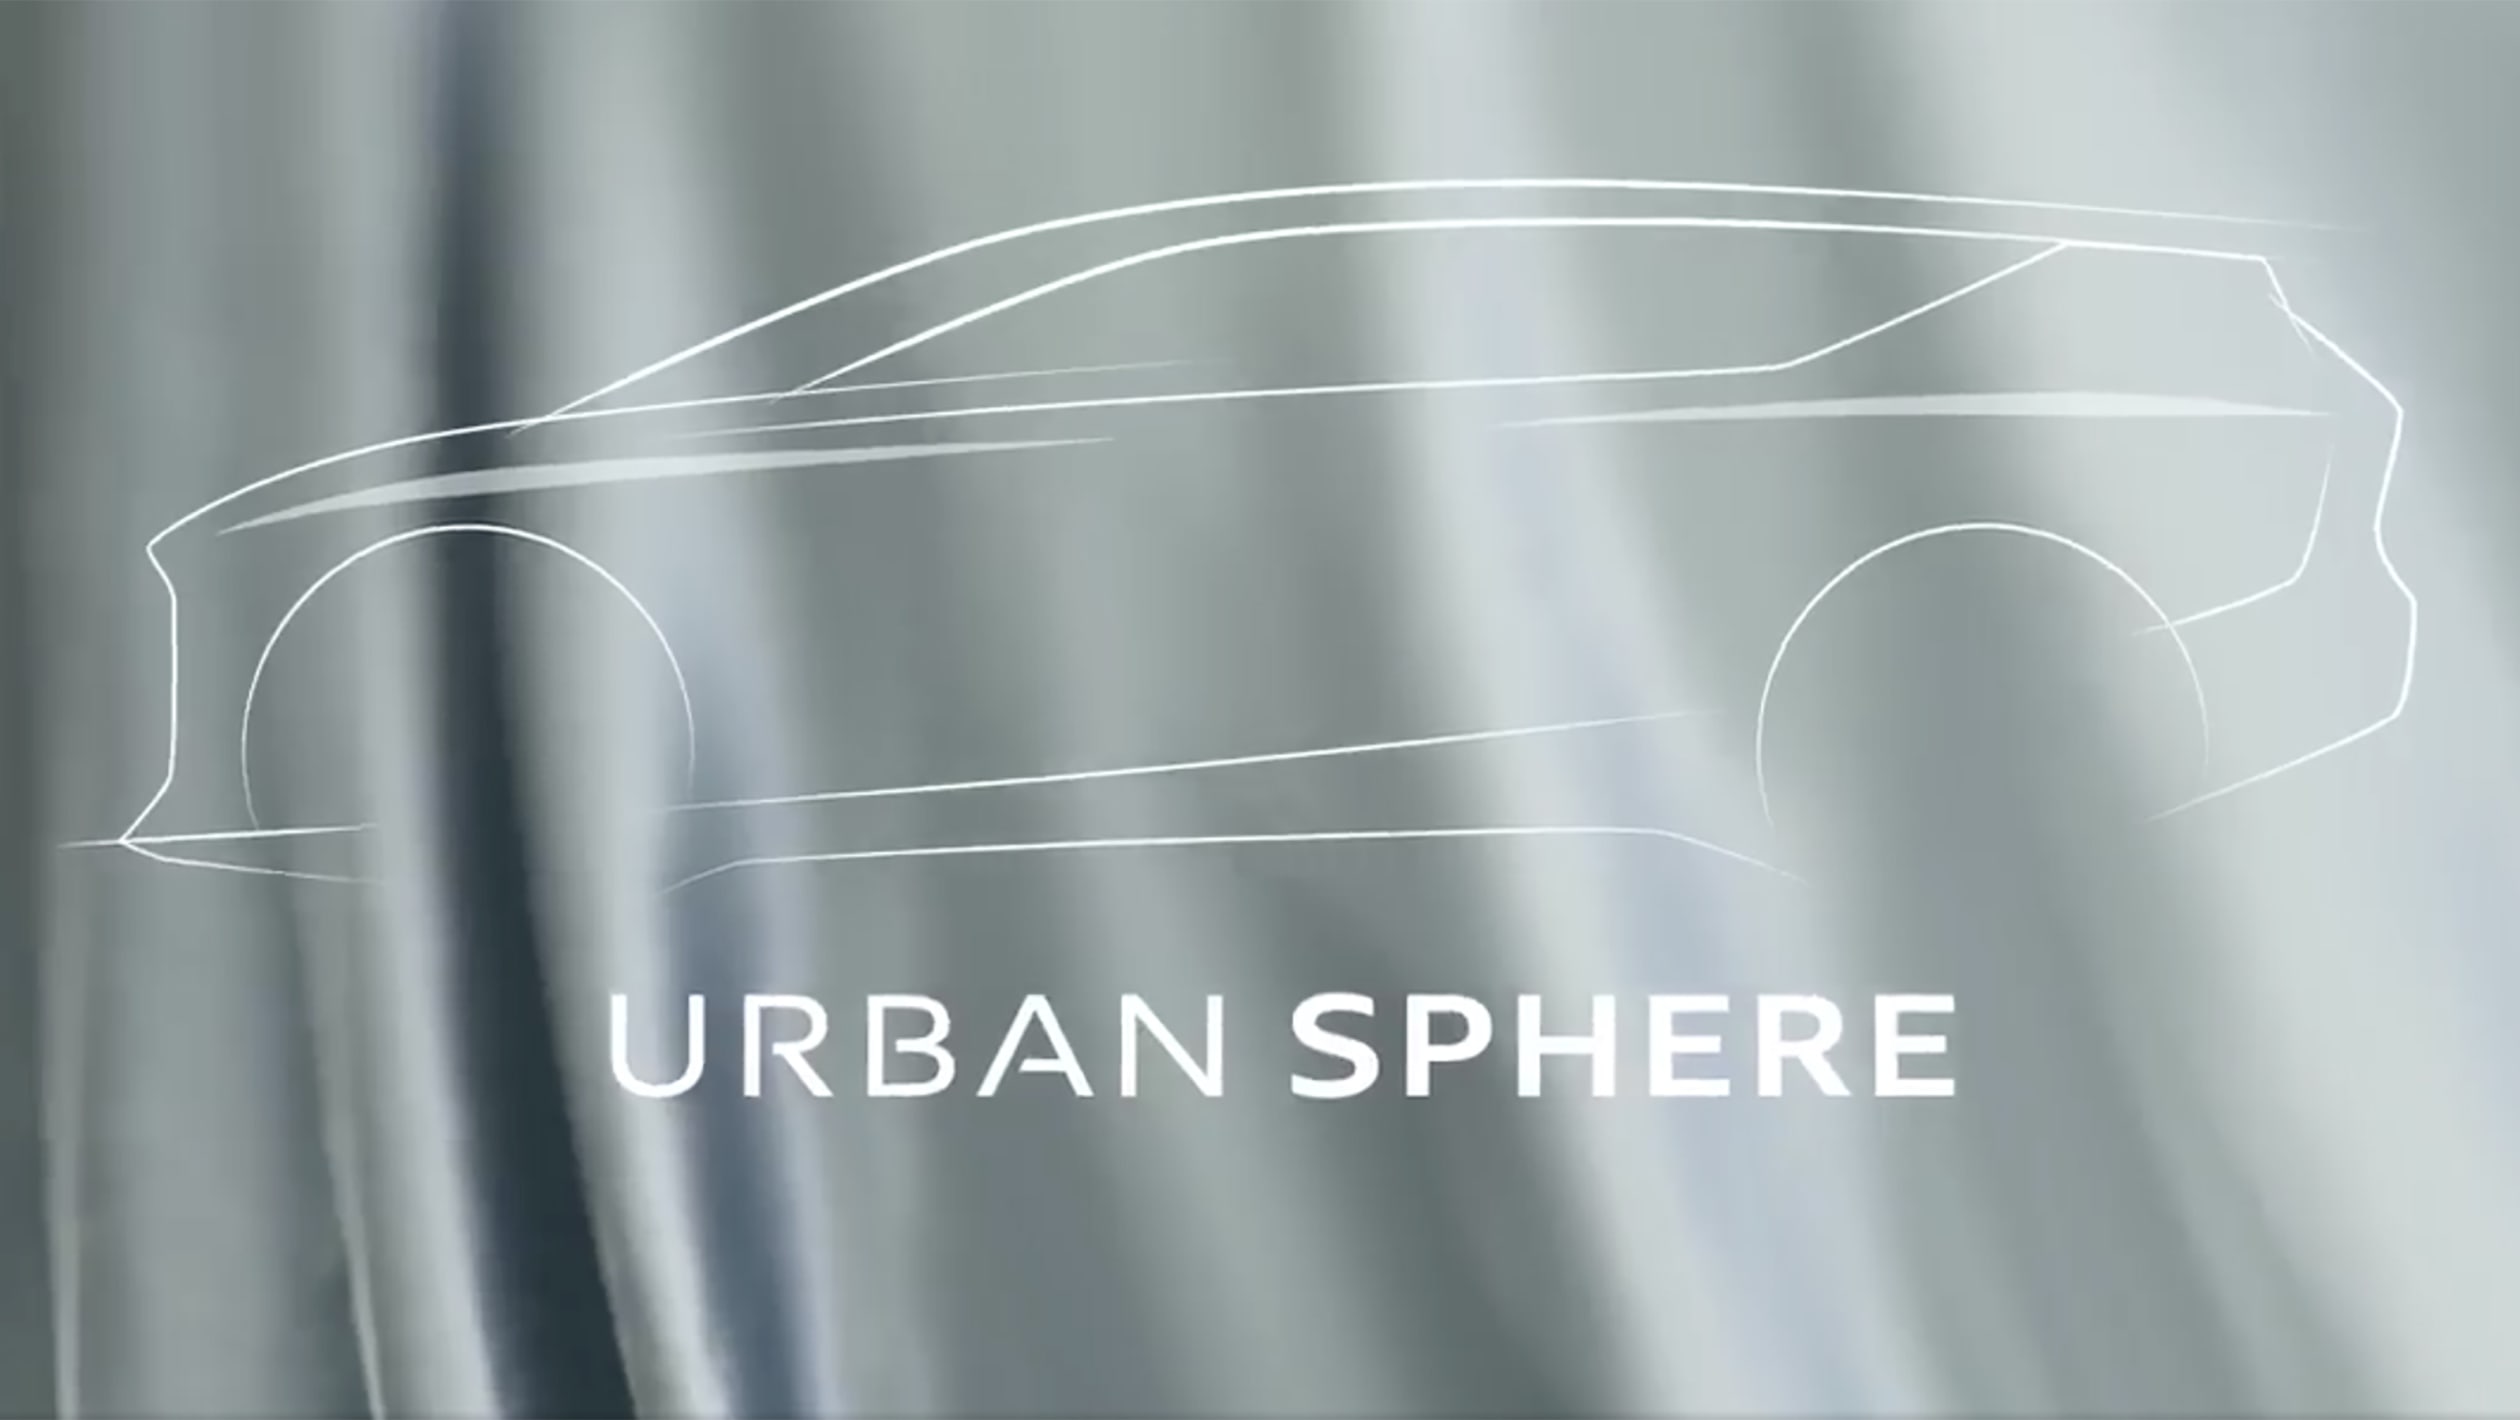 Audi Sphere concept car teaser images 4